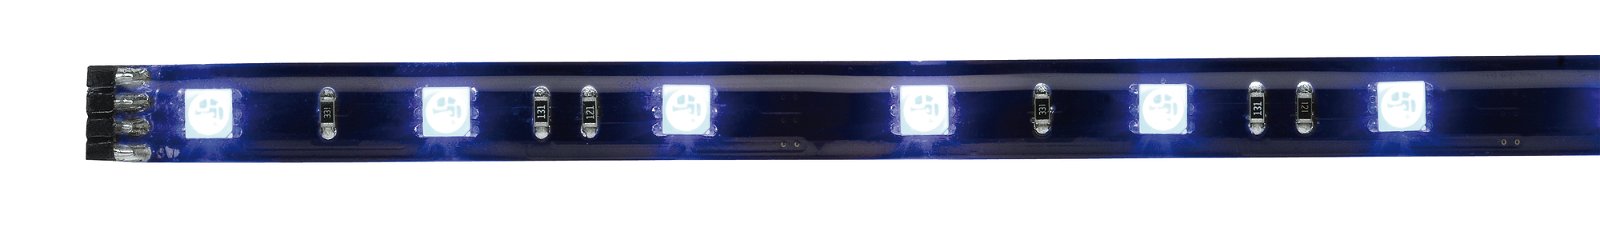 YourLED LED Strip RGB 1m beschichtet 7W 188lm/m RGB